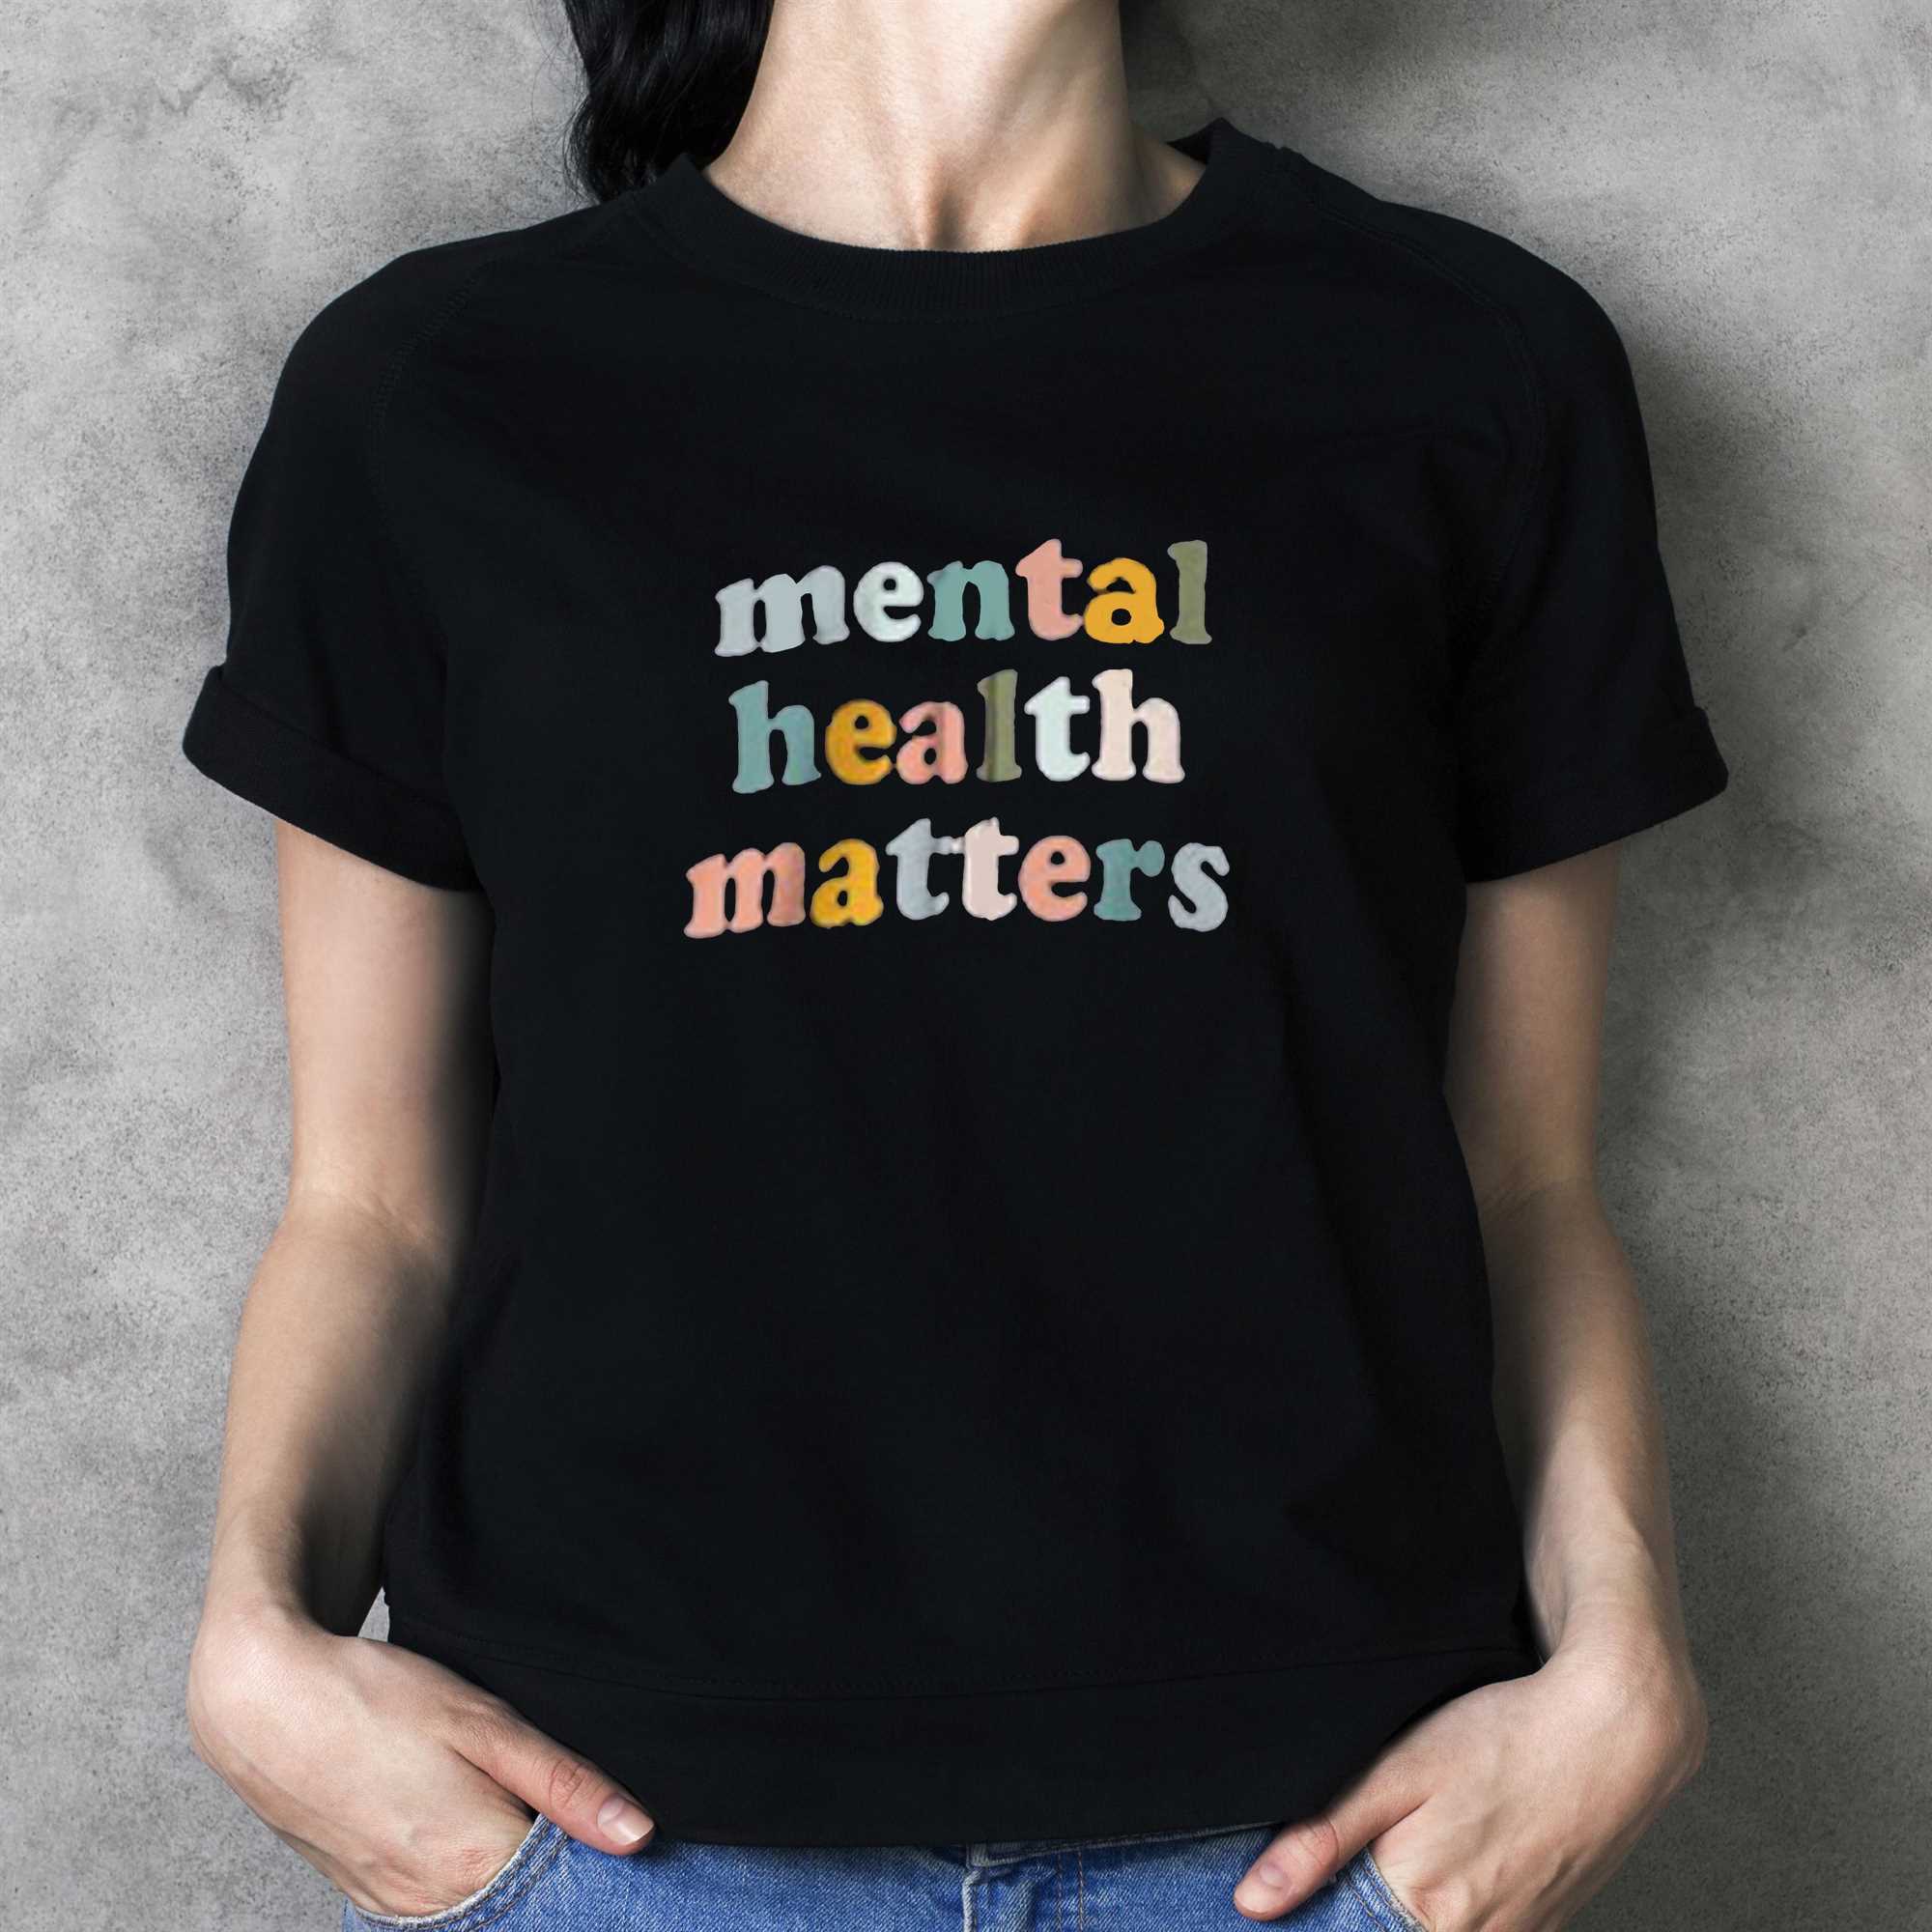 Black Mental Health Matters T-shirt